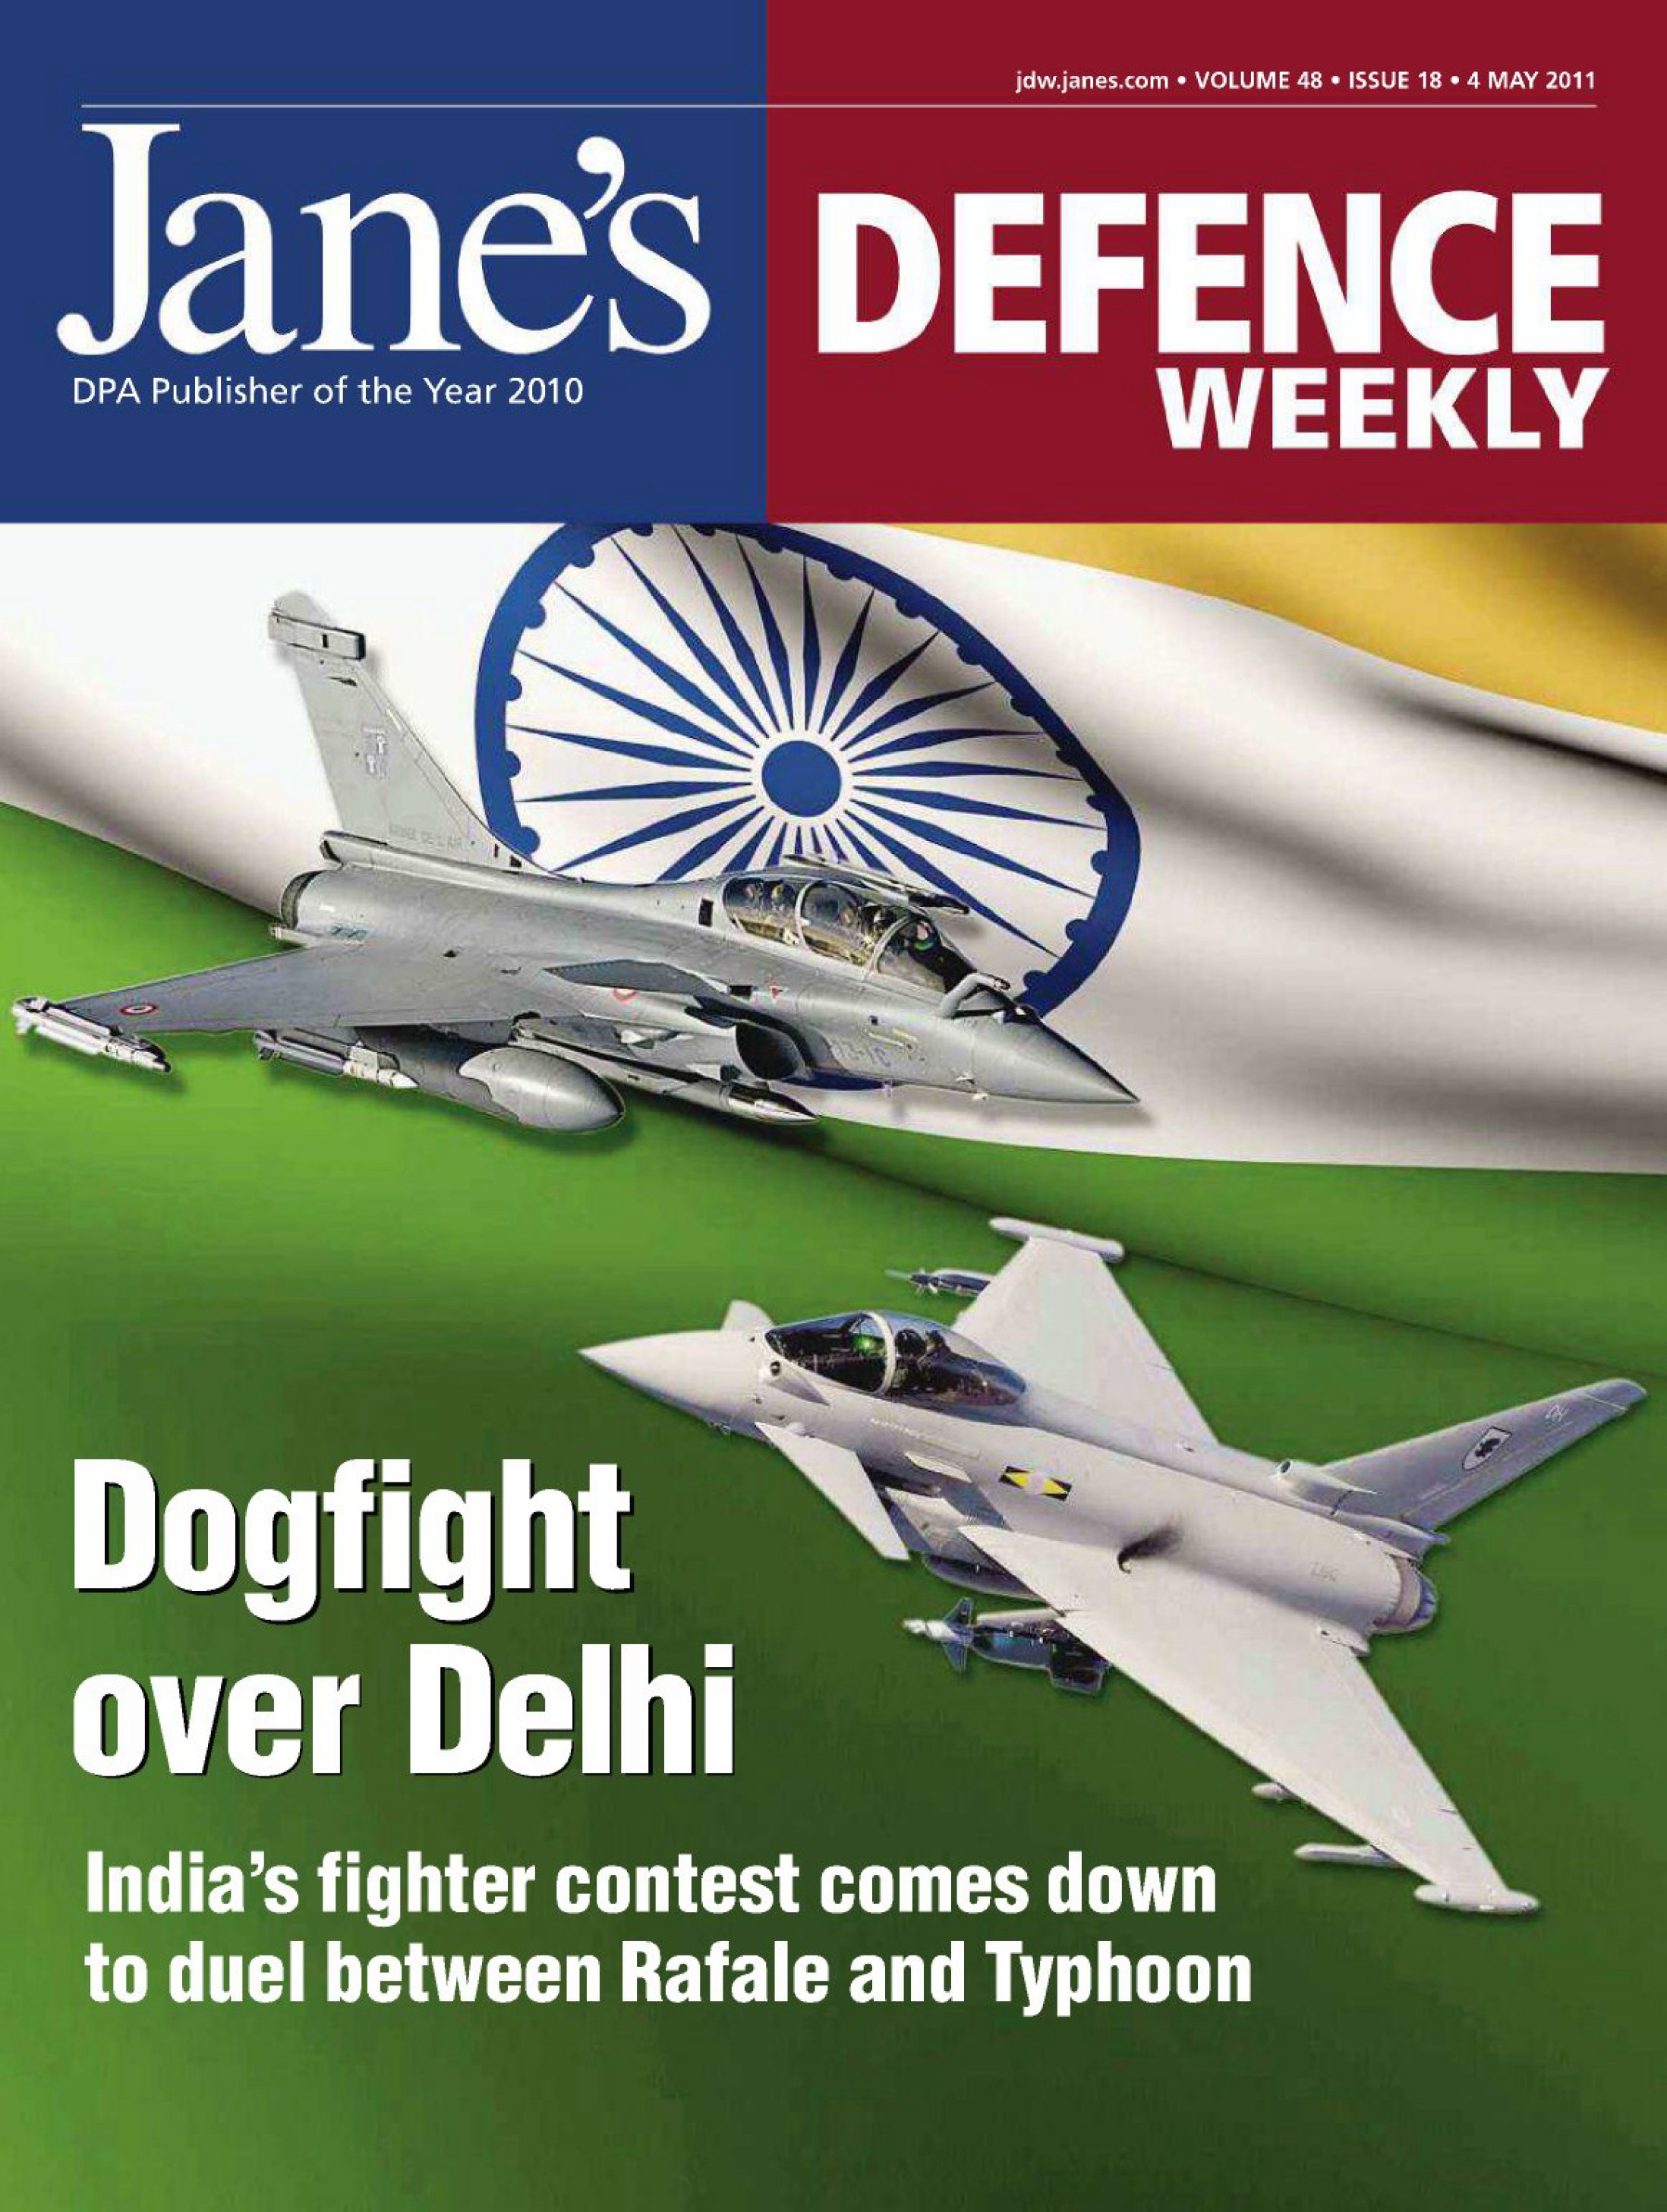 WOJSKO Militarne czasopisma i katalogi - Janes Defence Weekly - 2011 04 May.jpg